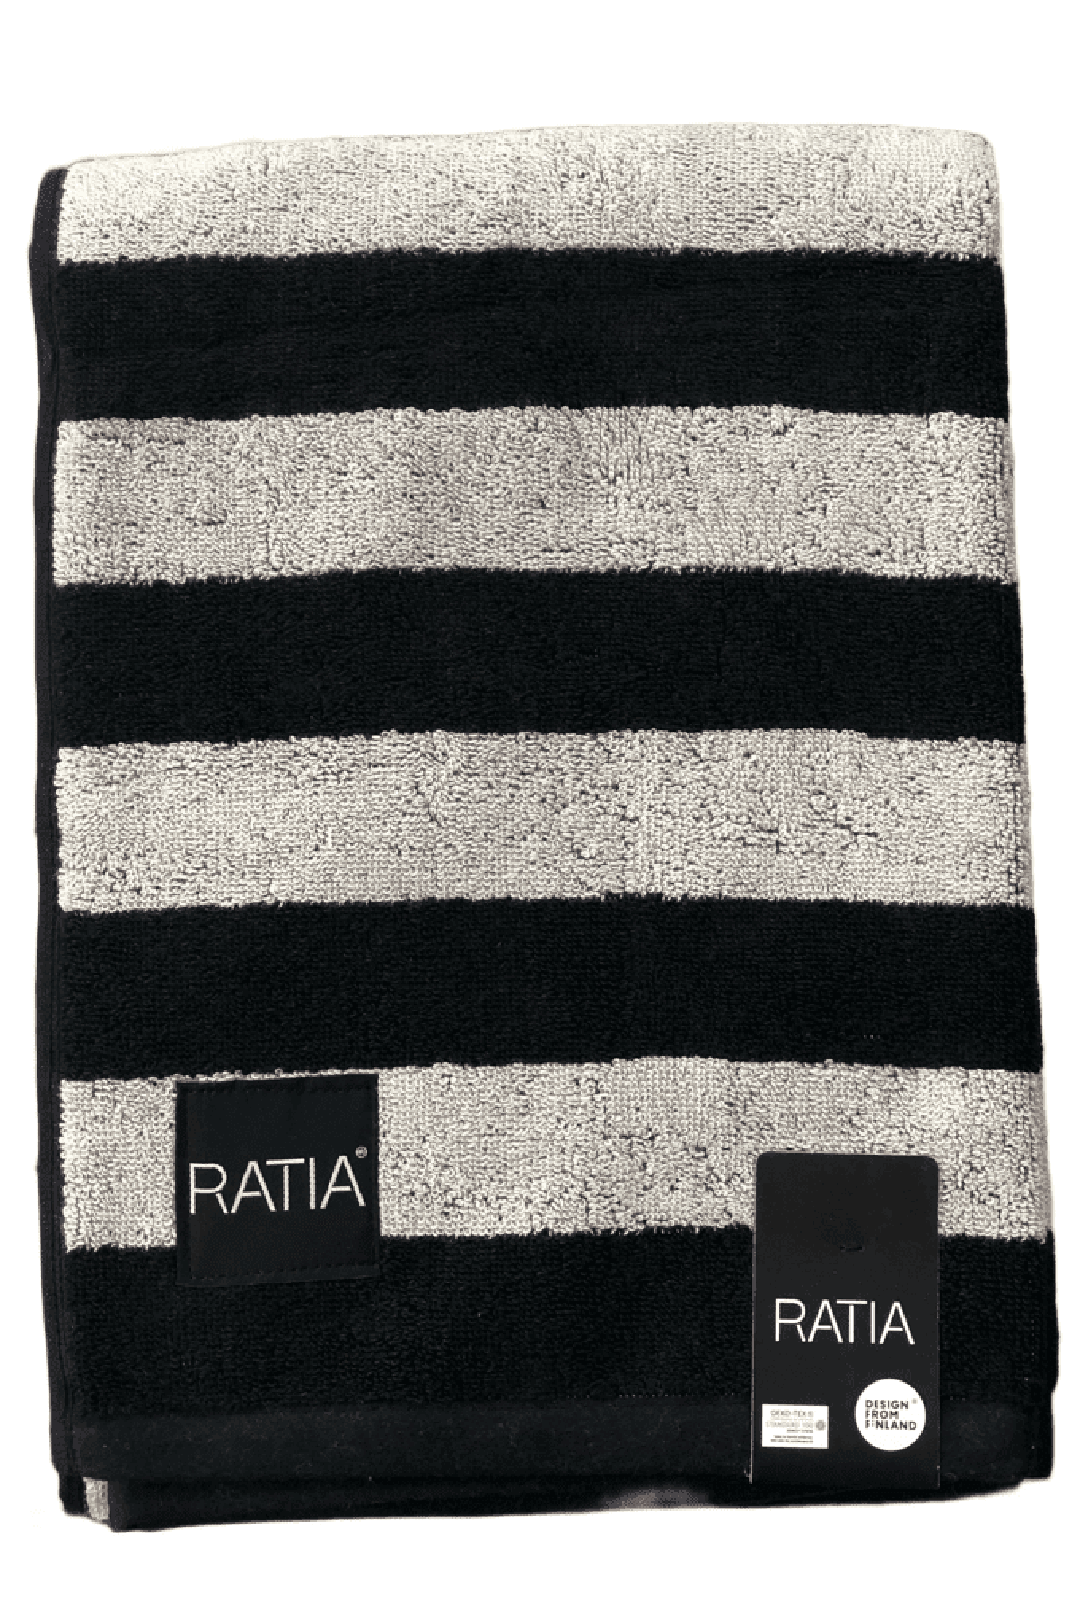 RATIA BATH TOWEL WIDE STRIPE, BLACK/SAND (70x140cm)